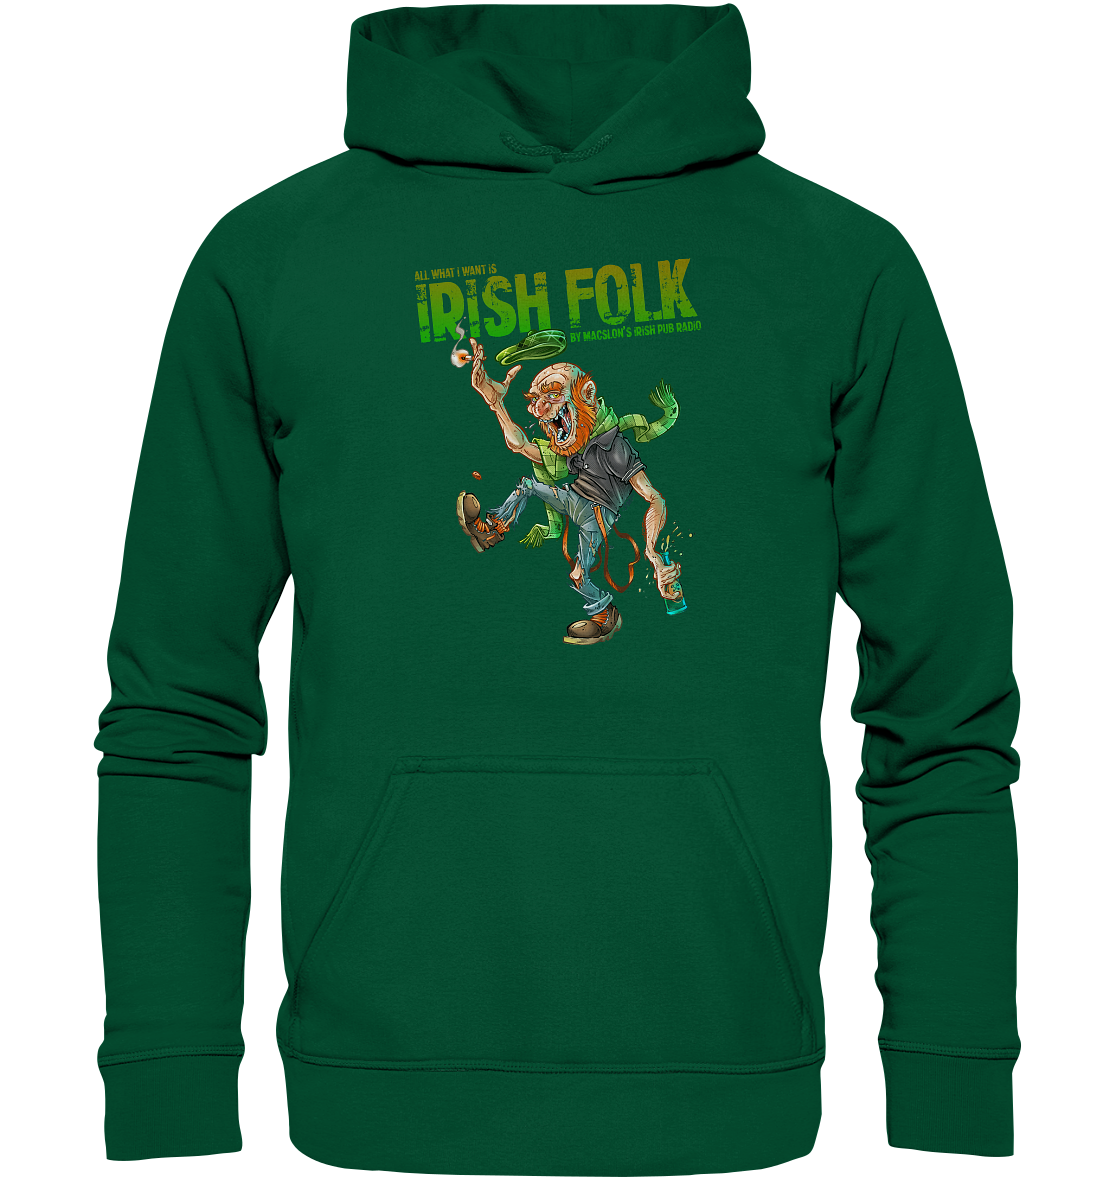 All What I Want Is "Irish Folk"  - Basic Unisex Hoodie